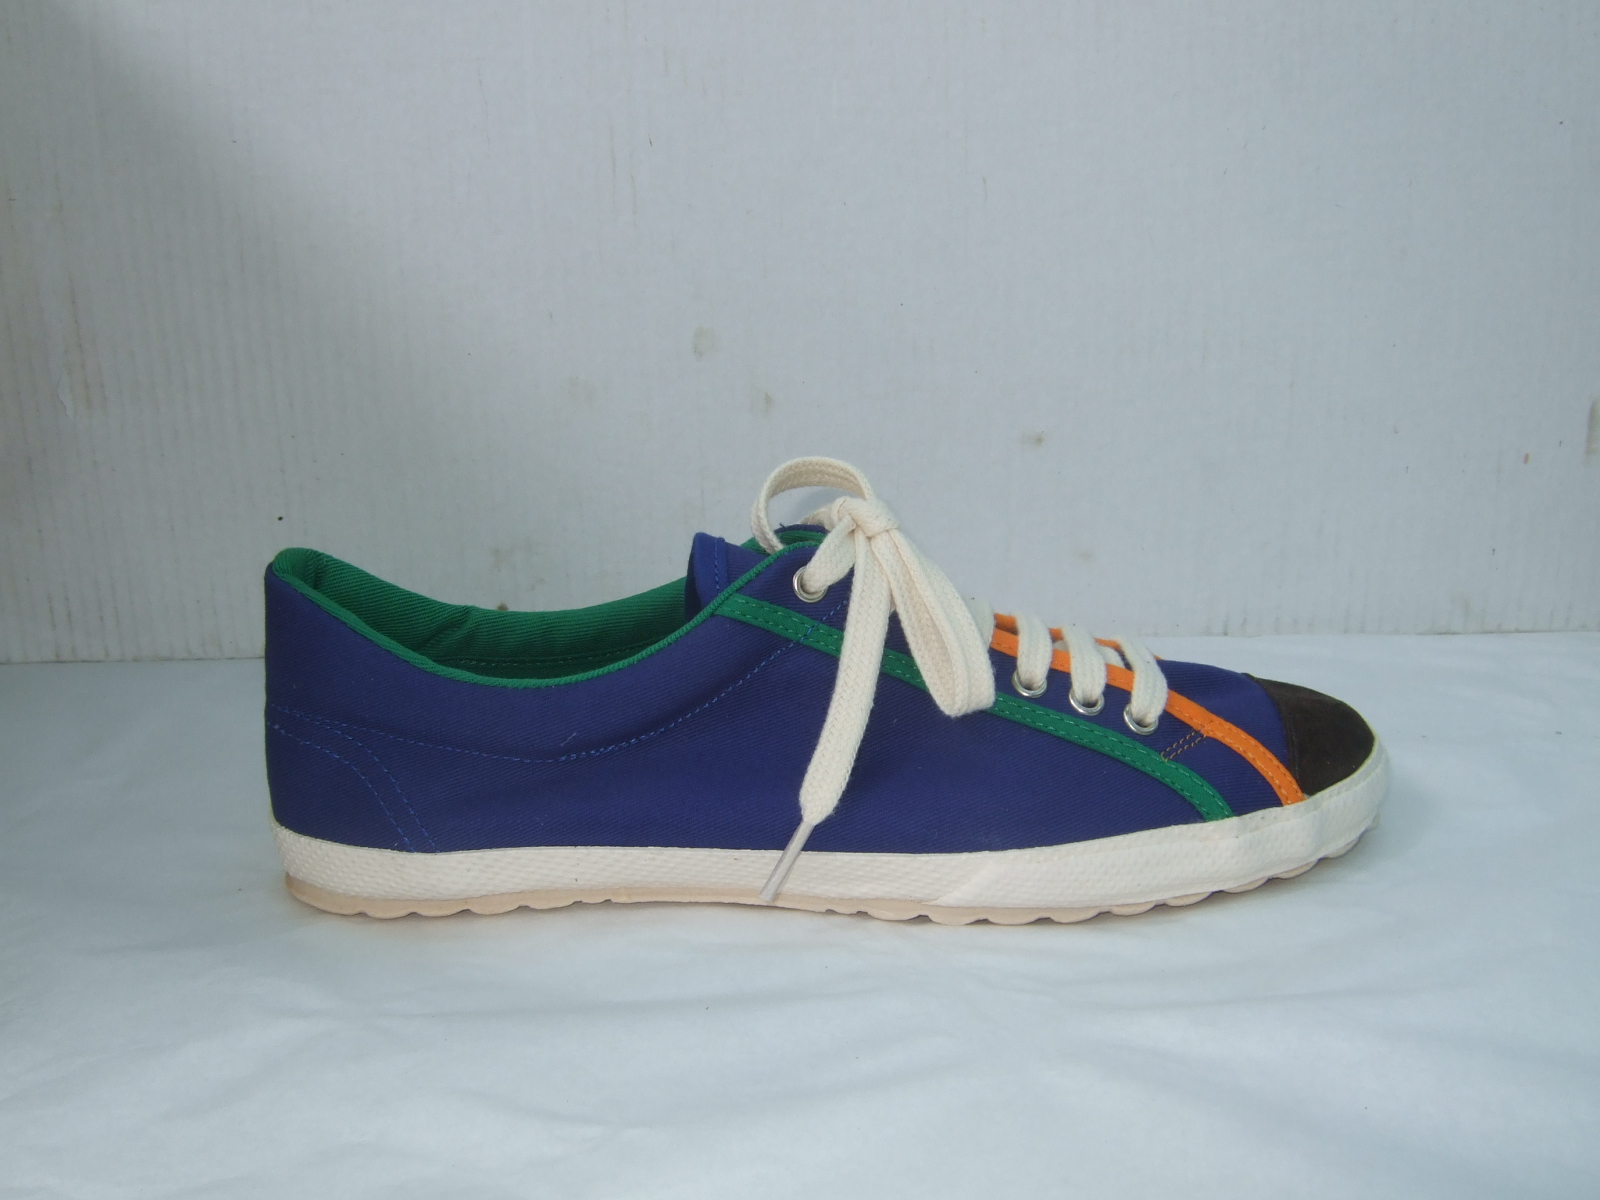 Jeremy Stanford / Tezla Shoes: El Ganso-fresh colours for summer